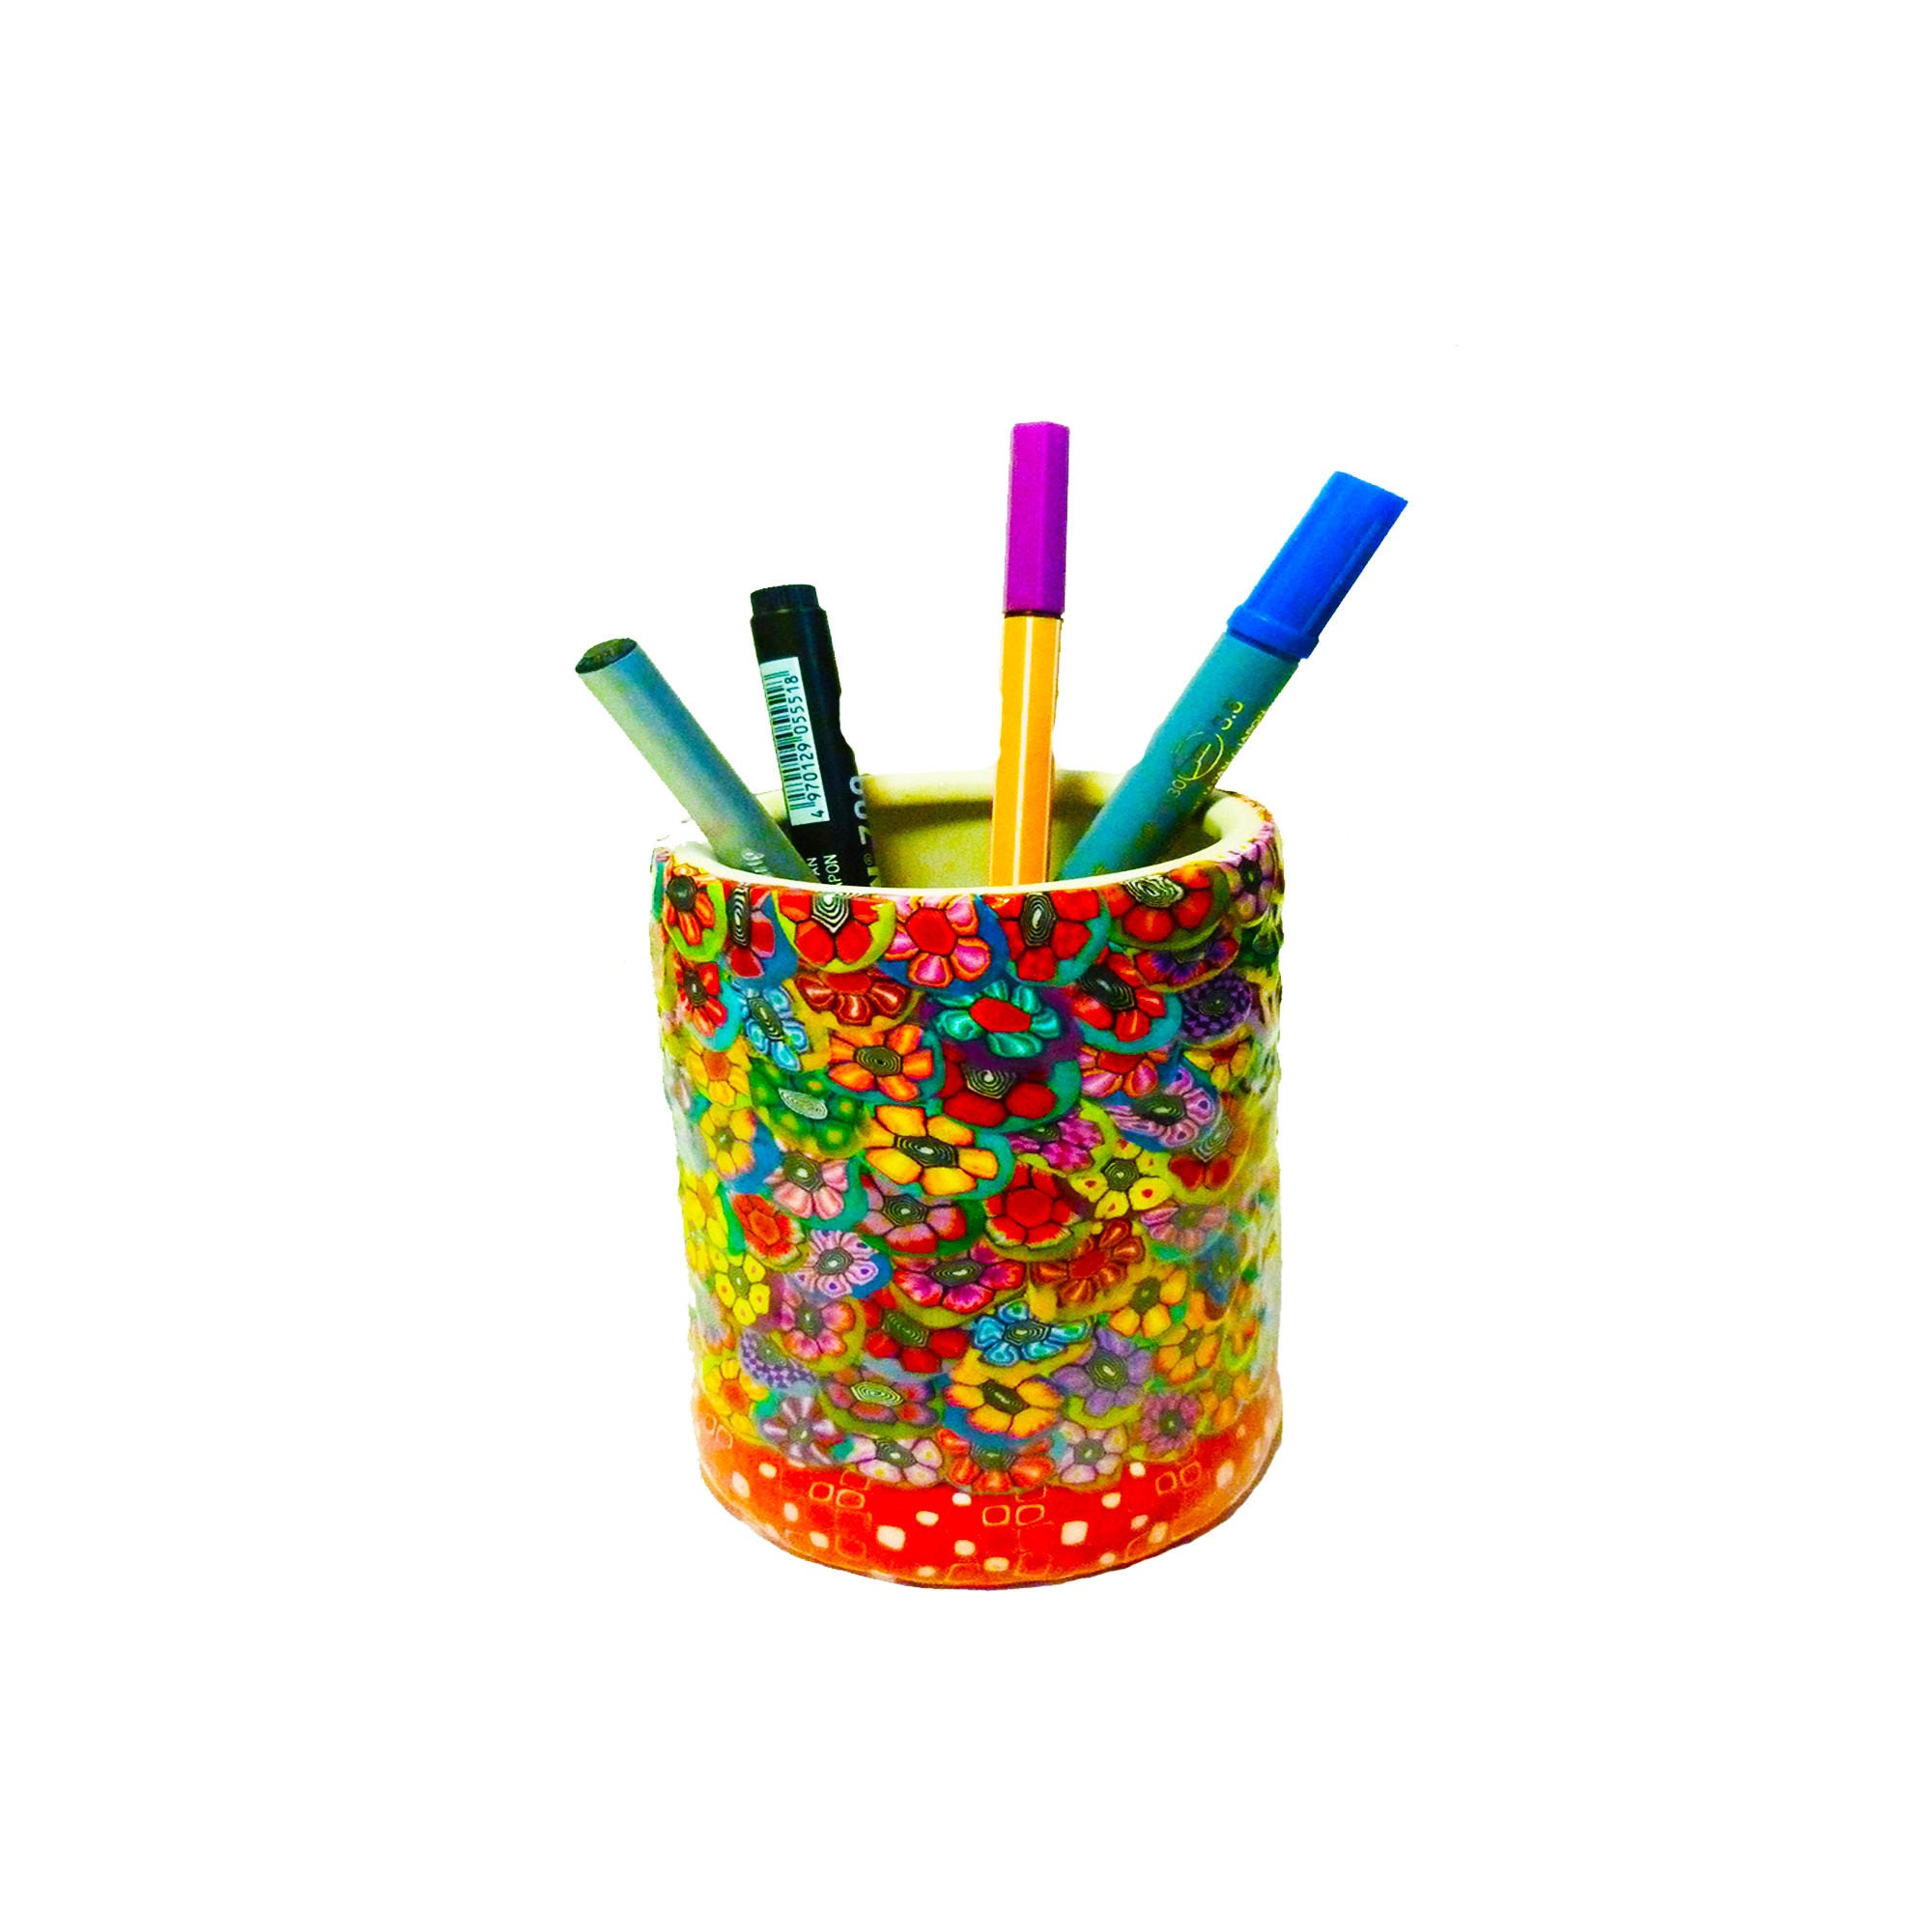 Colorful and Unique Pencil Holder, Pen Holder for Desk, Ceramic